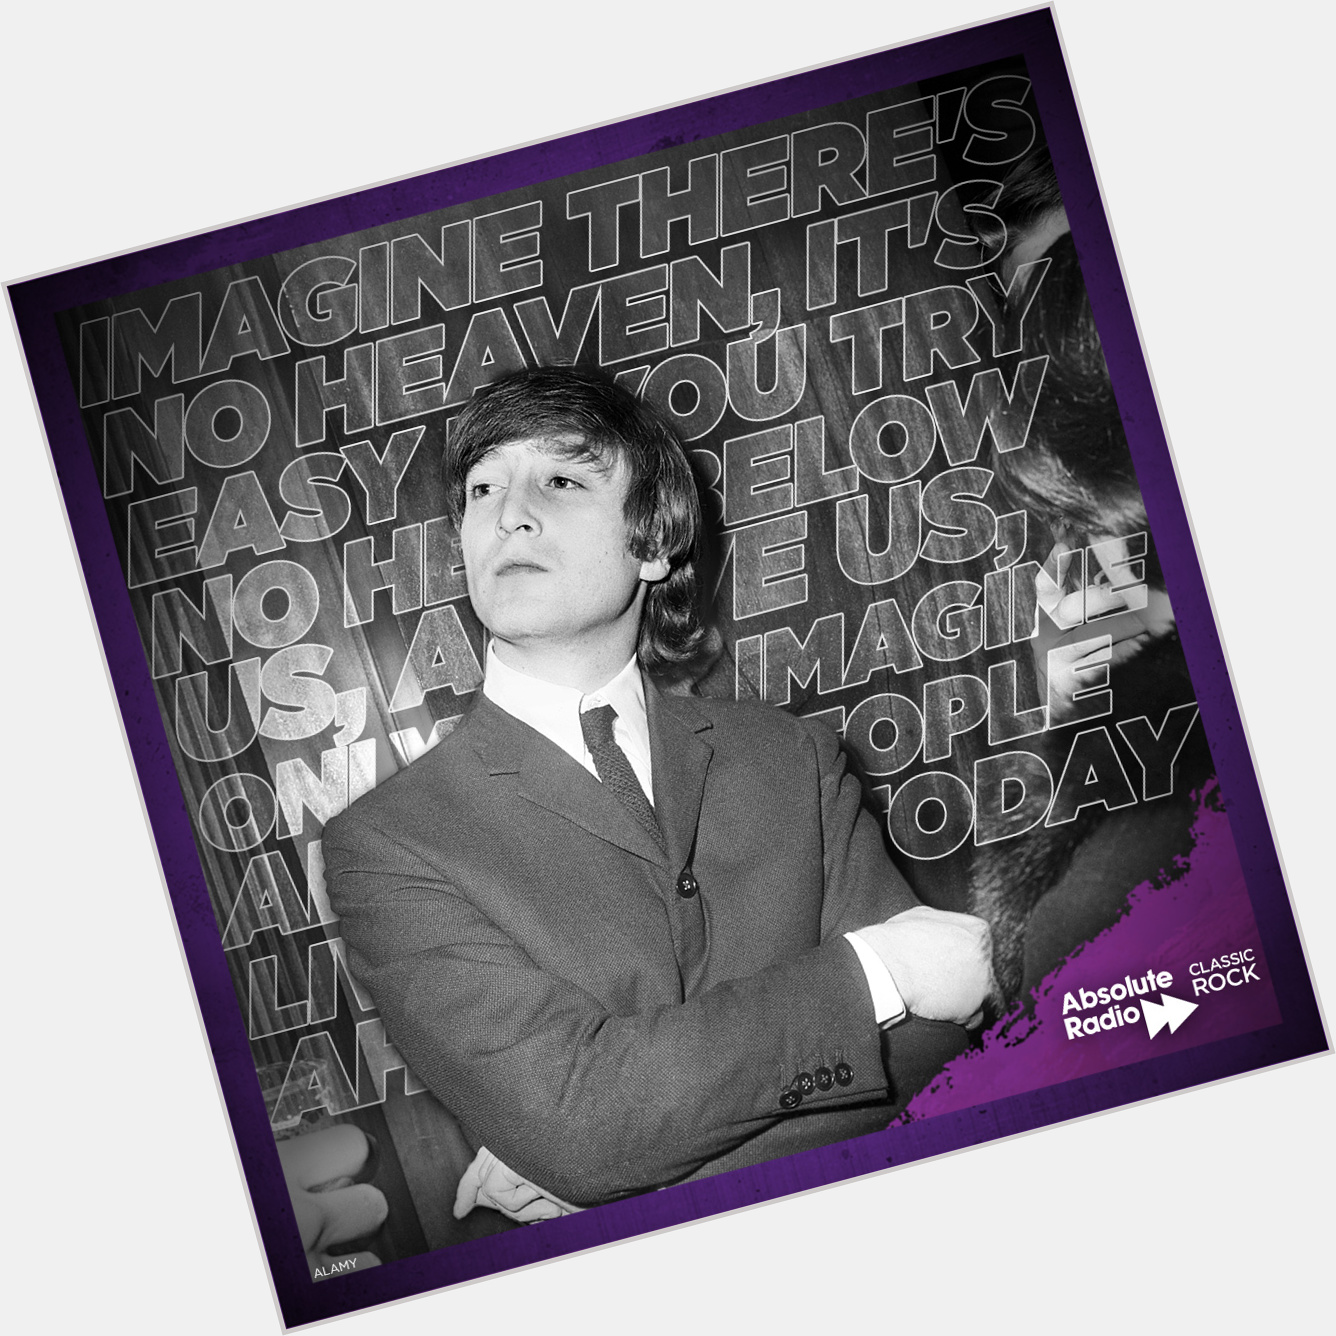 Happy birthday, John Lennon. Music misses you. 